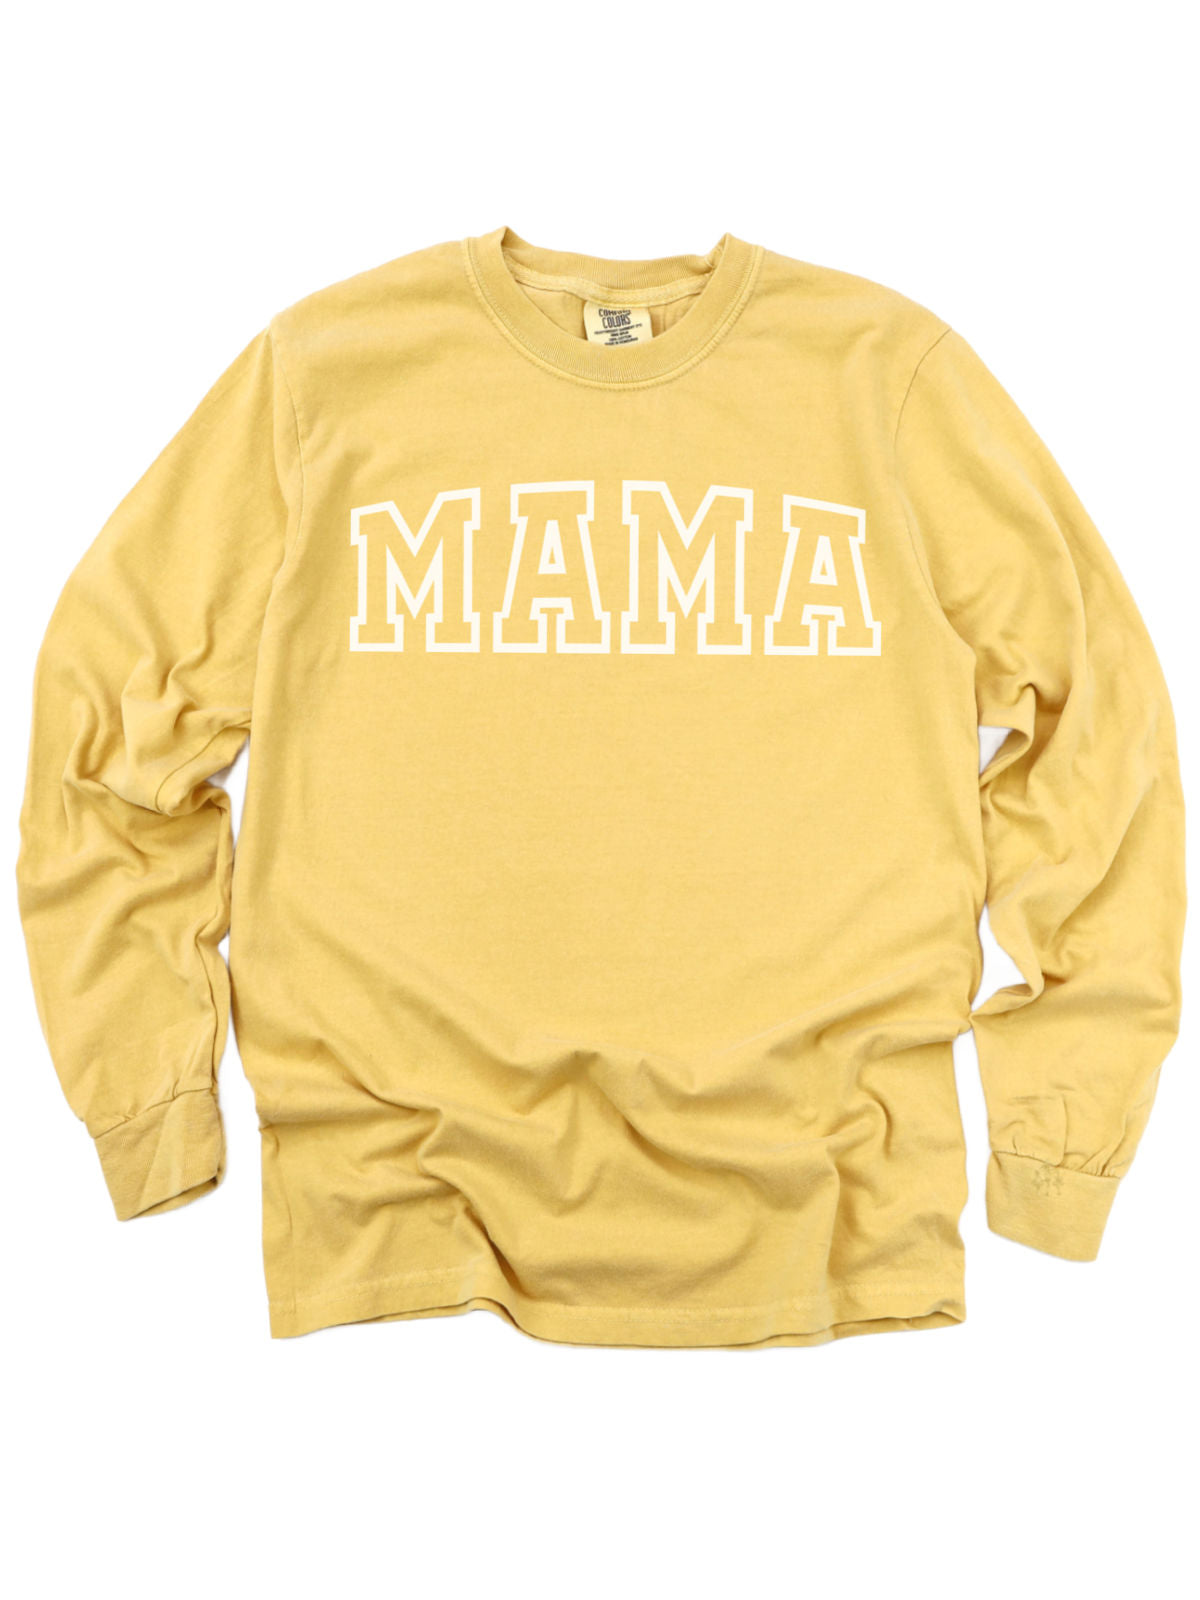 MAMA Varsity Long Sleeve Mustard Yellow Shirt